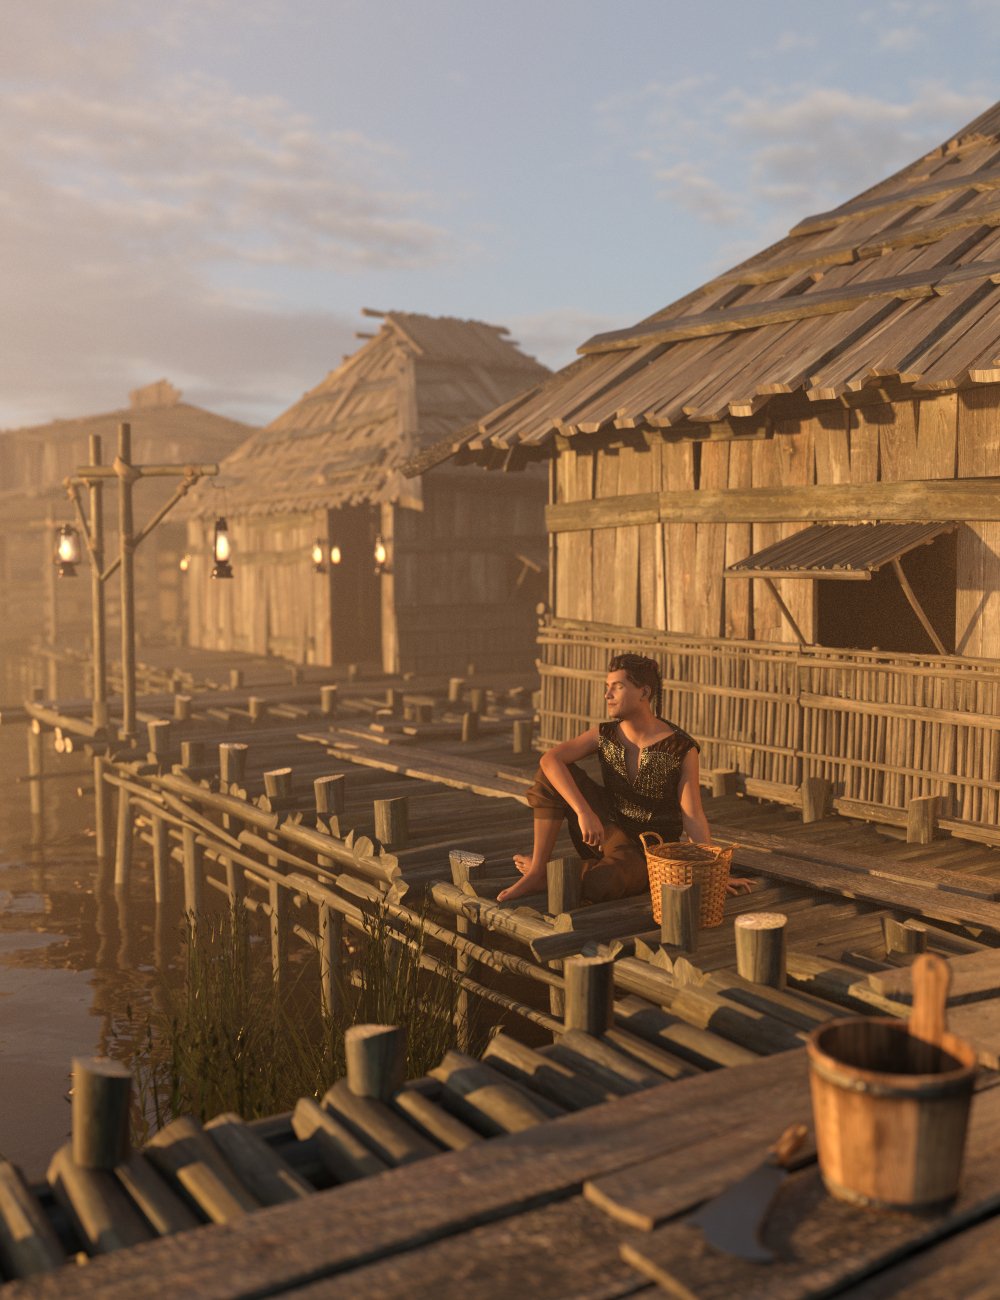 Swamp Huts by: Enterables, 3D Models by Daz 3D